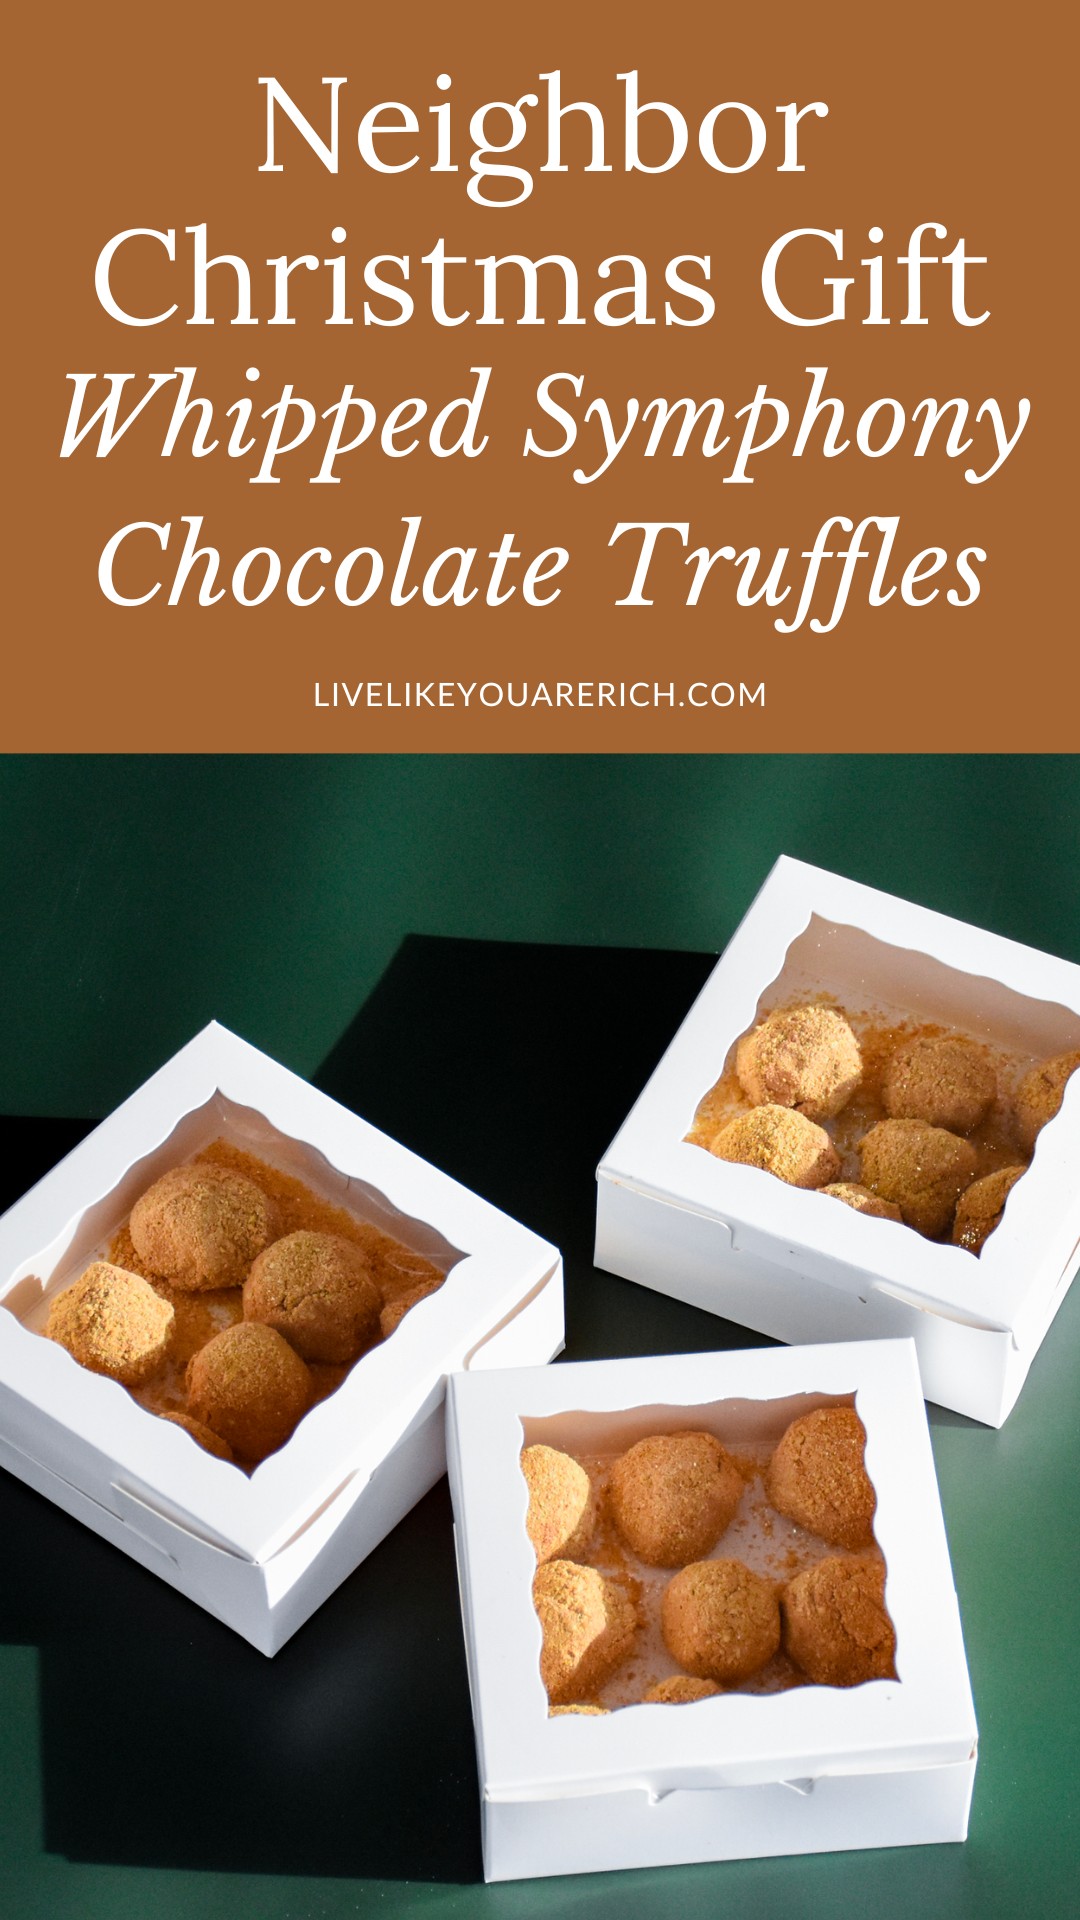 Neighbor Christmas Gift: Whipped Symphony Chocolate Truffles